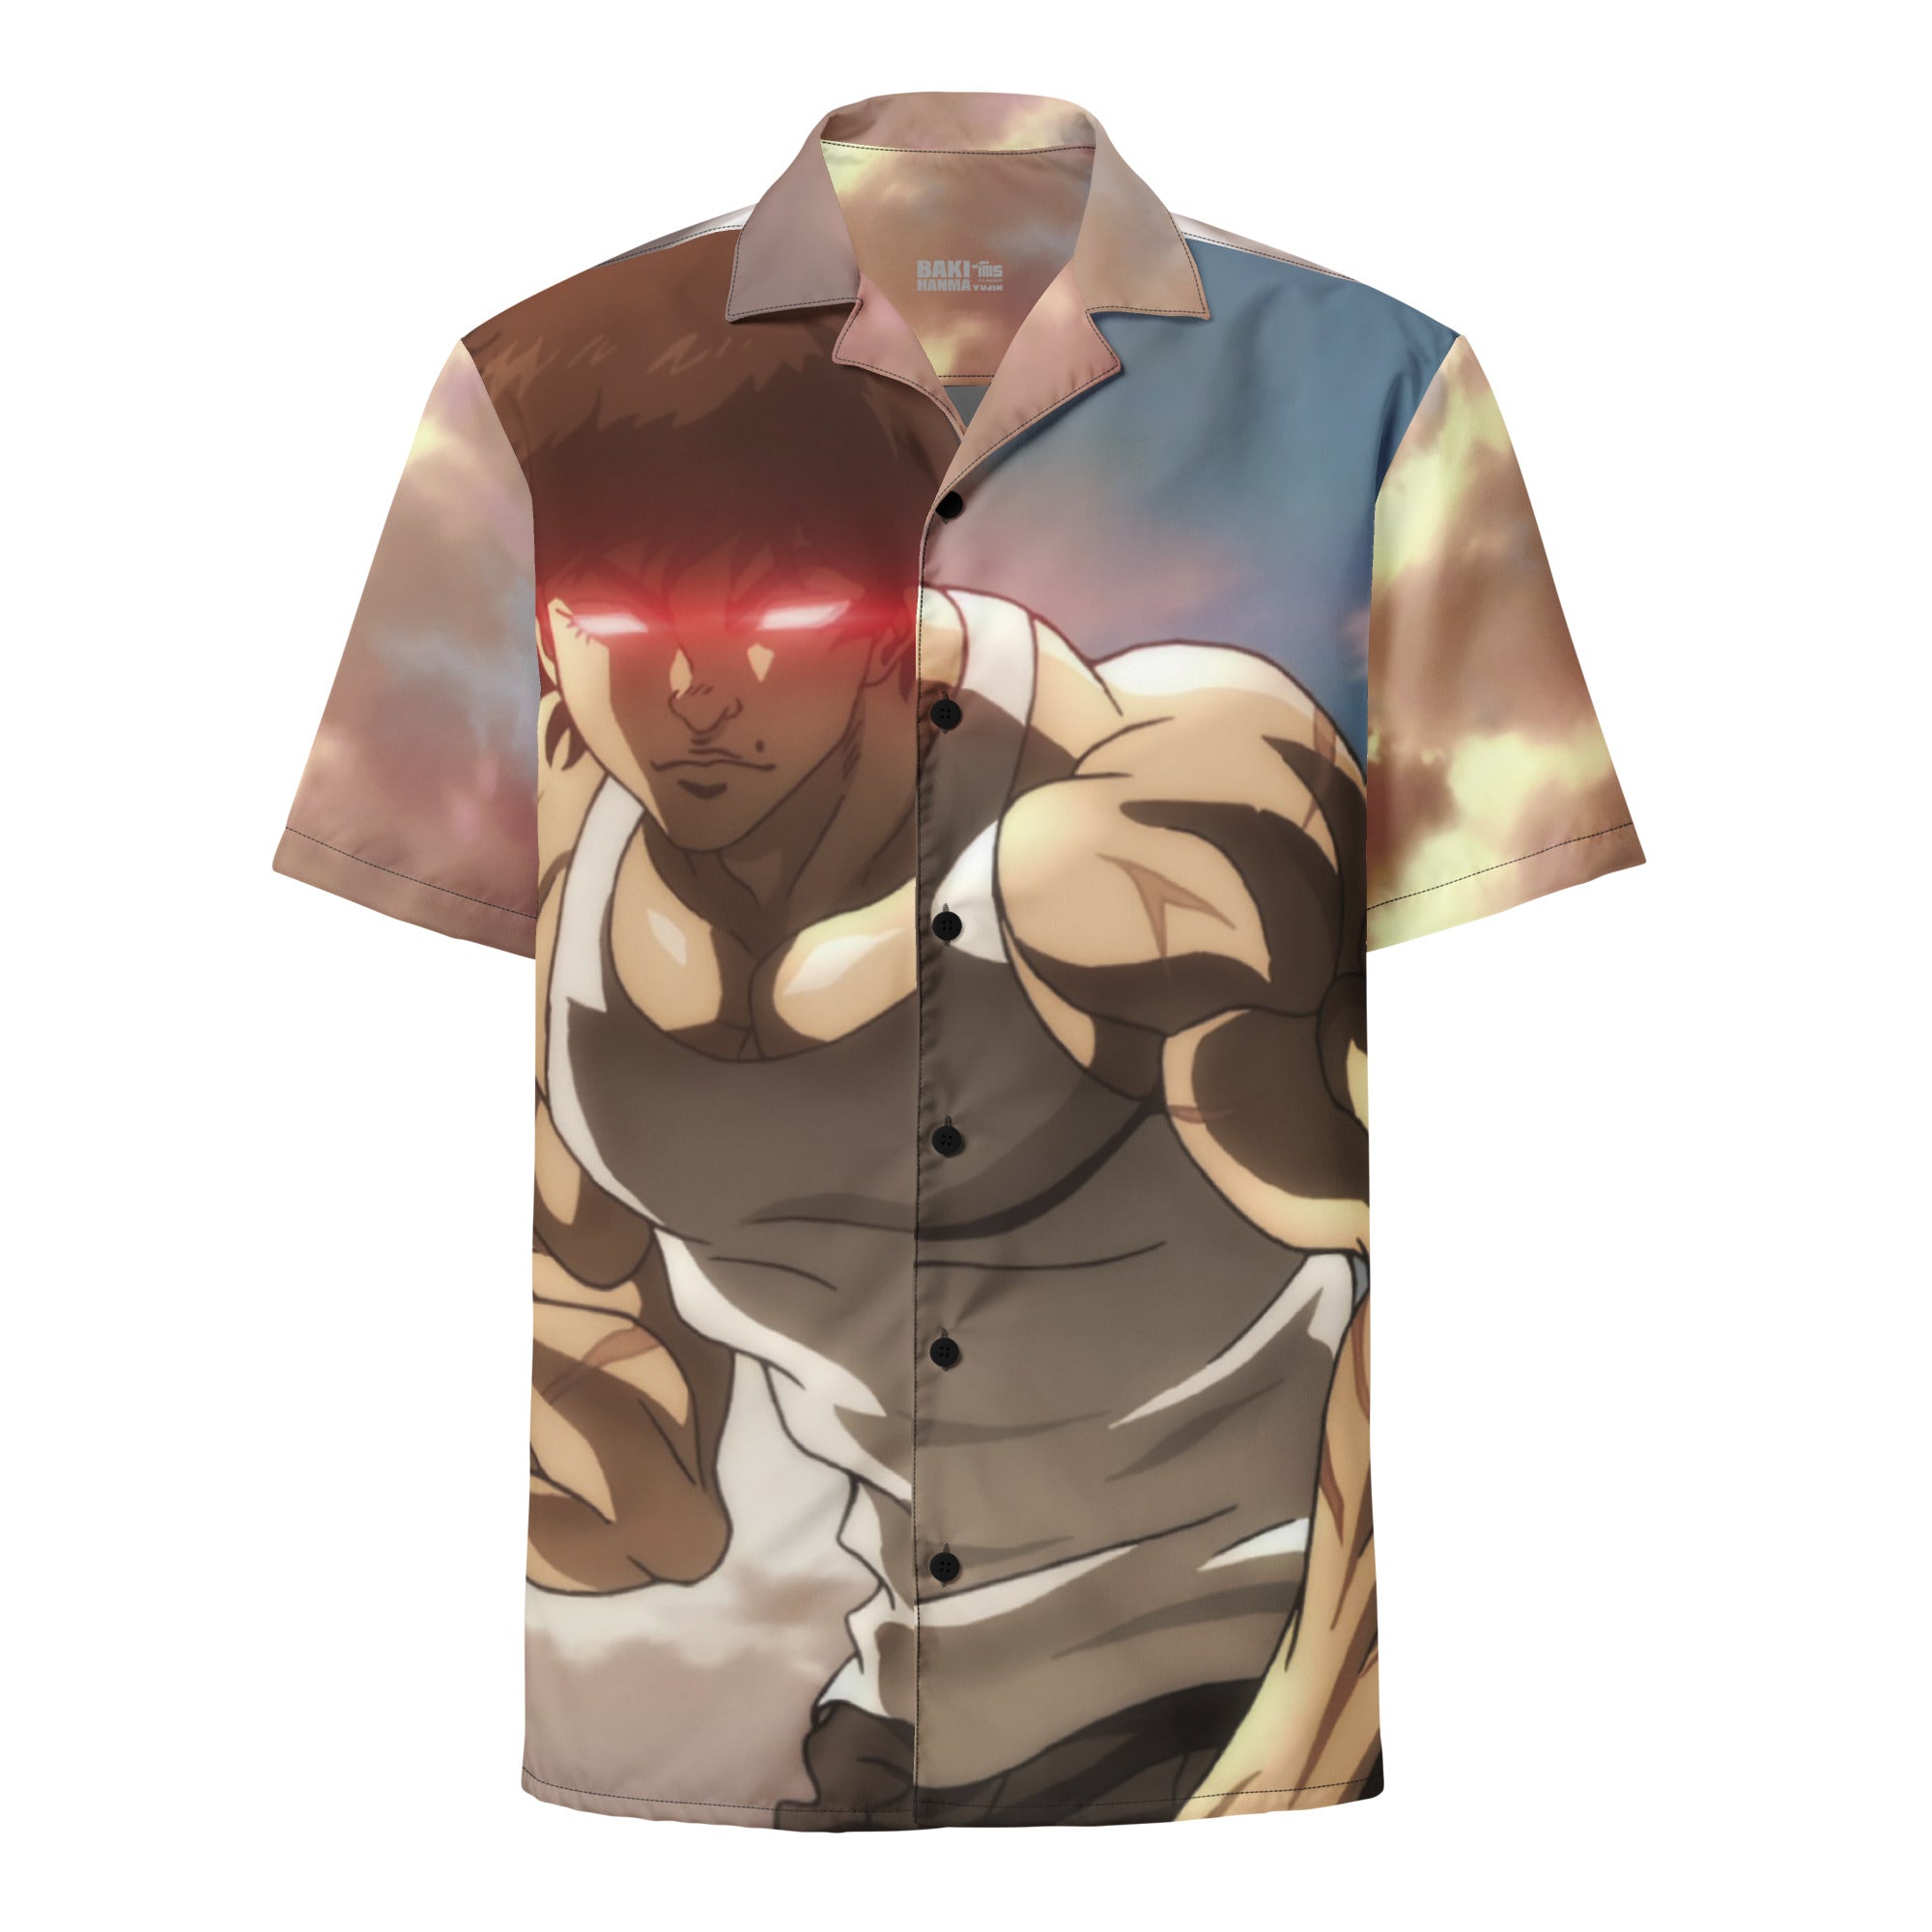 Anime Baki The Grappler T-Shirt - Baki Hanma